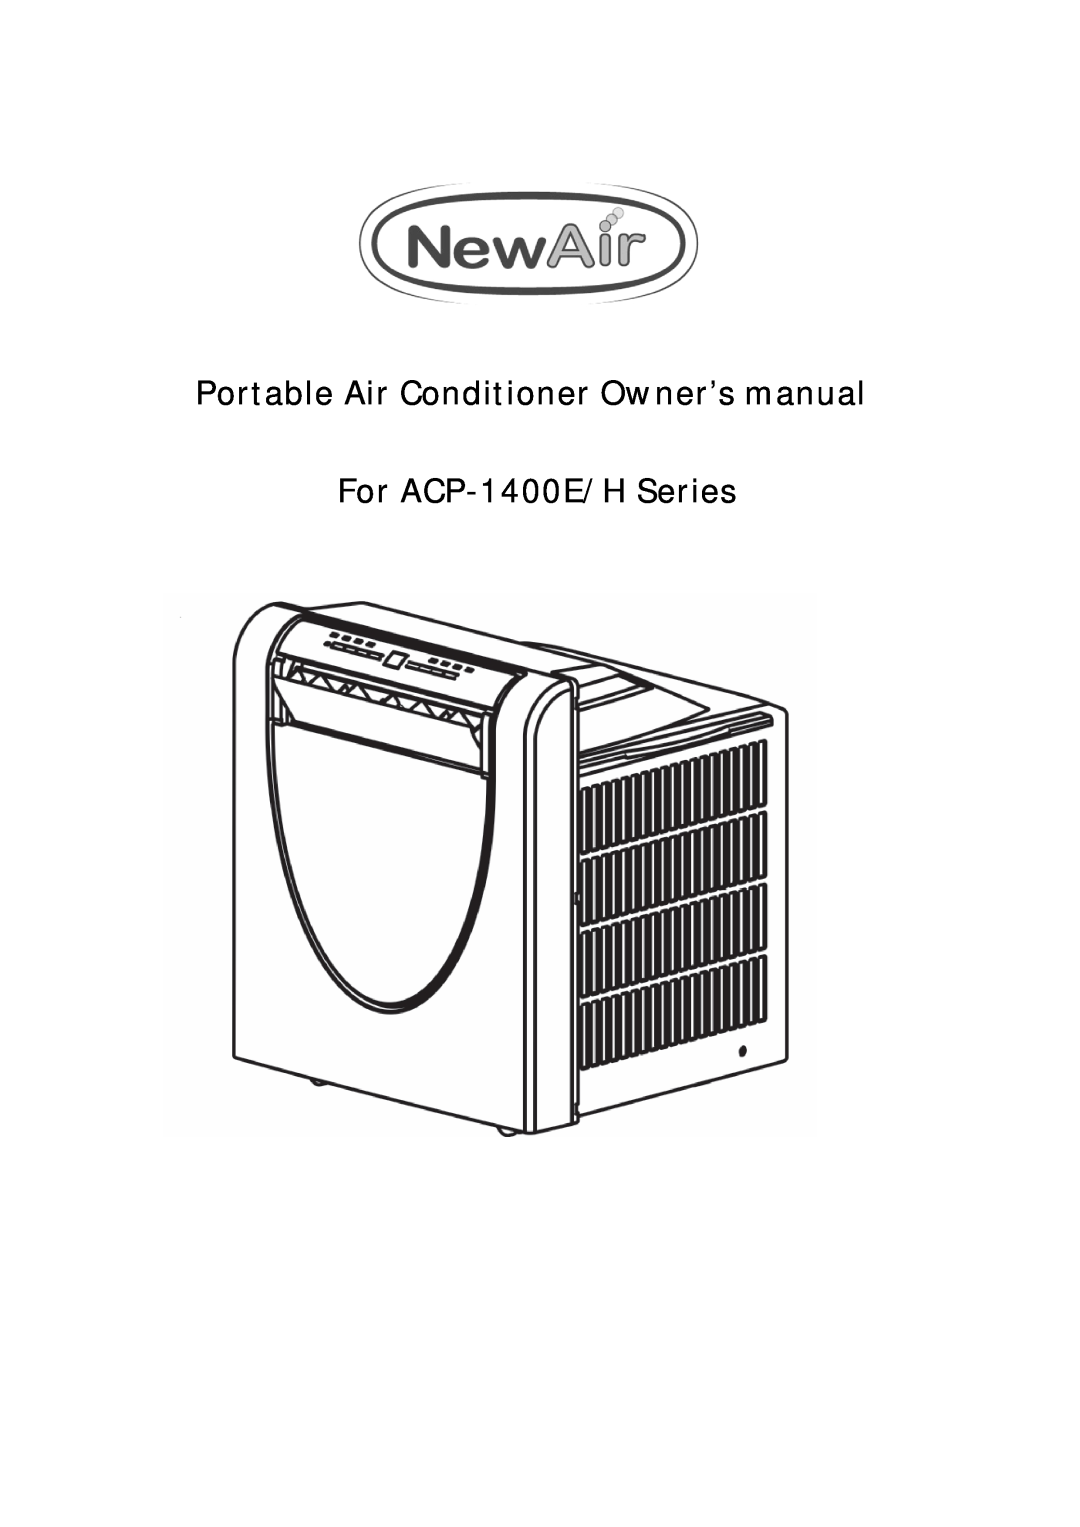 NewAir owner manual For ACP-1400E/HSeries 